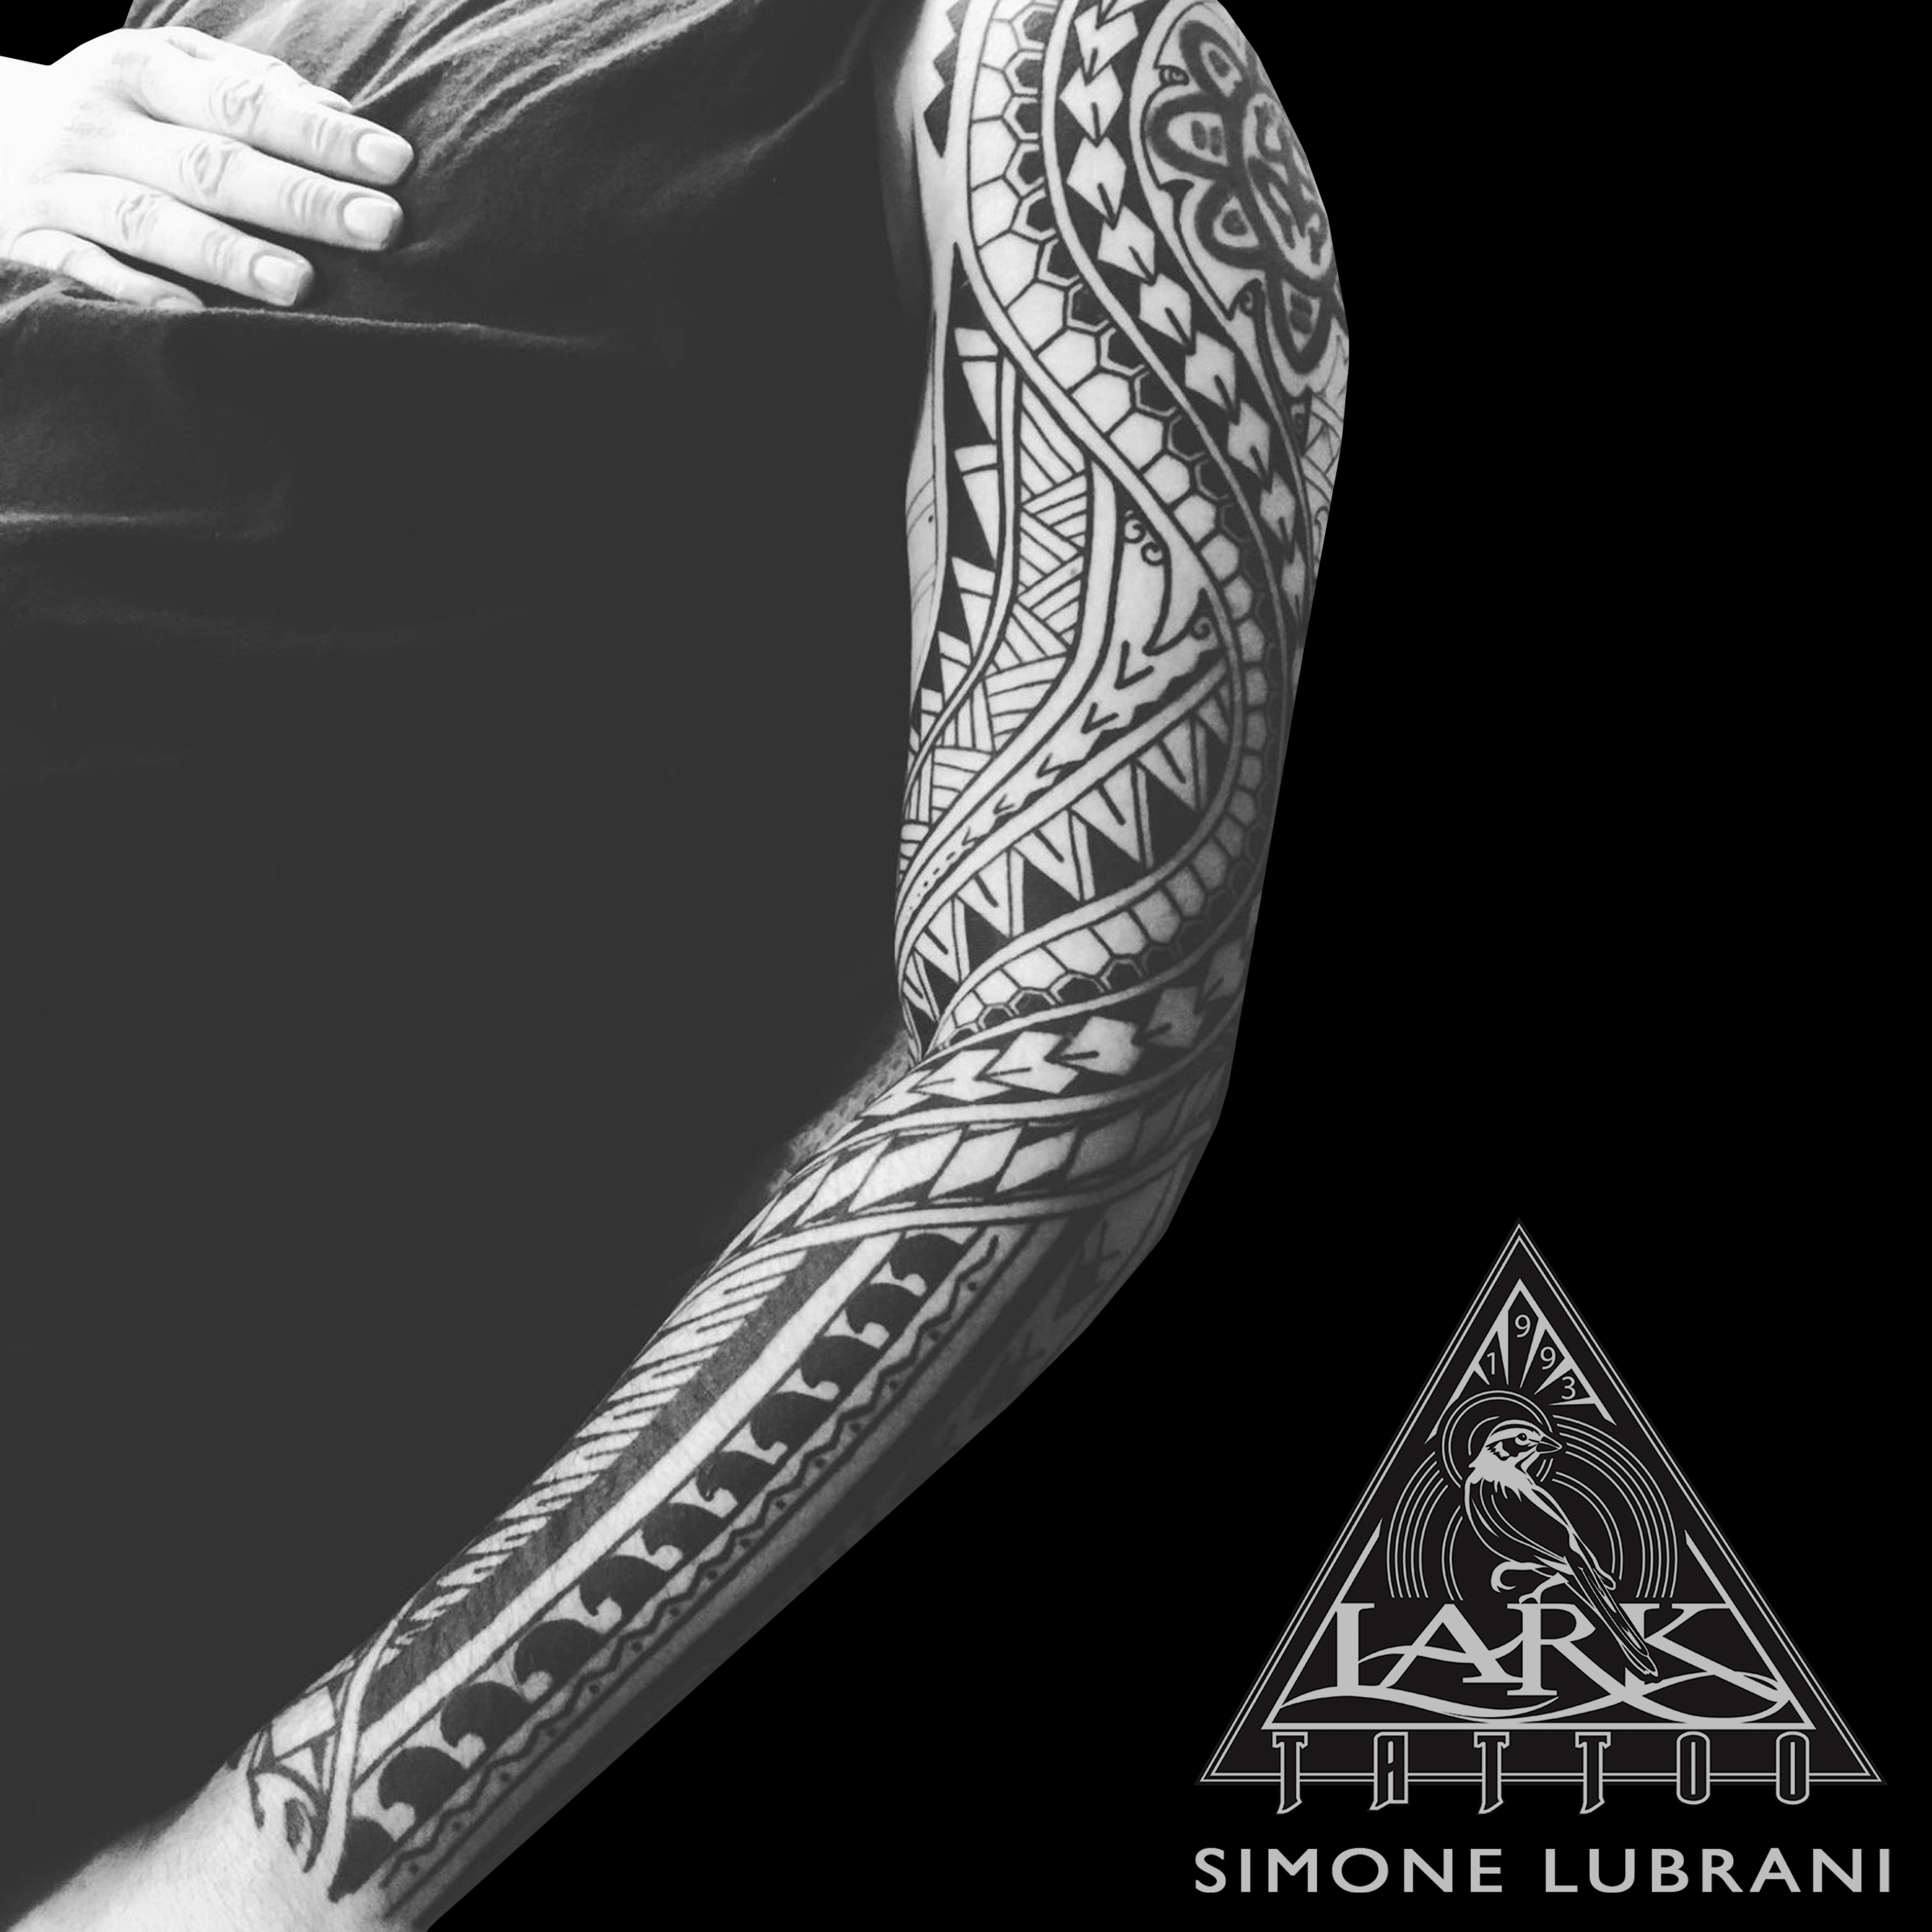 #LarkTattoo #Tattoo #SimoneLubrani #SimoneLubraniLarkTattoo #Tattoos #polynesian #polynesiantattoo #PolynesianTattoos #PolynesianDesigns #tribal #tribaltattoo #tribalmaori #polynesianstyle #Maori #MaoriTattoo #TattooSleeve #SleeveTattoo #ArmTattoo #FullArmTattoo #blackink #blacktattoo #blackinktattoo #BNGInkSociety #BNGTattoo #TattooArtist #Tattoist #Tattooer #LongIslandTattooArtist #LongIslandTattooer #LongIslandTattoo #TattooOfTheDay #Tat #Tats #Tatts #Tatted #Inked #Ink #TattooInk #AmazingInk #AmazingTattoo #BodyArt #LarkTattooWestbury #Westbury #LongIsland #NY #NewYork #USA #Art #Tattedup #InkedUp #LarkTattoos